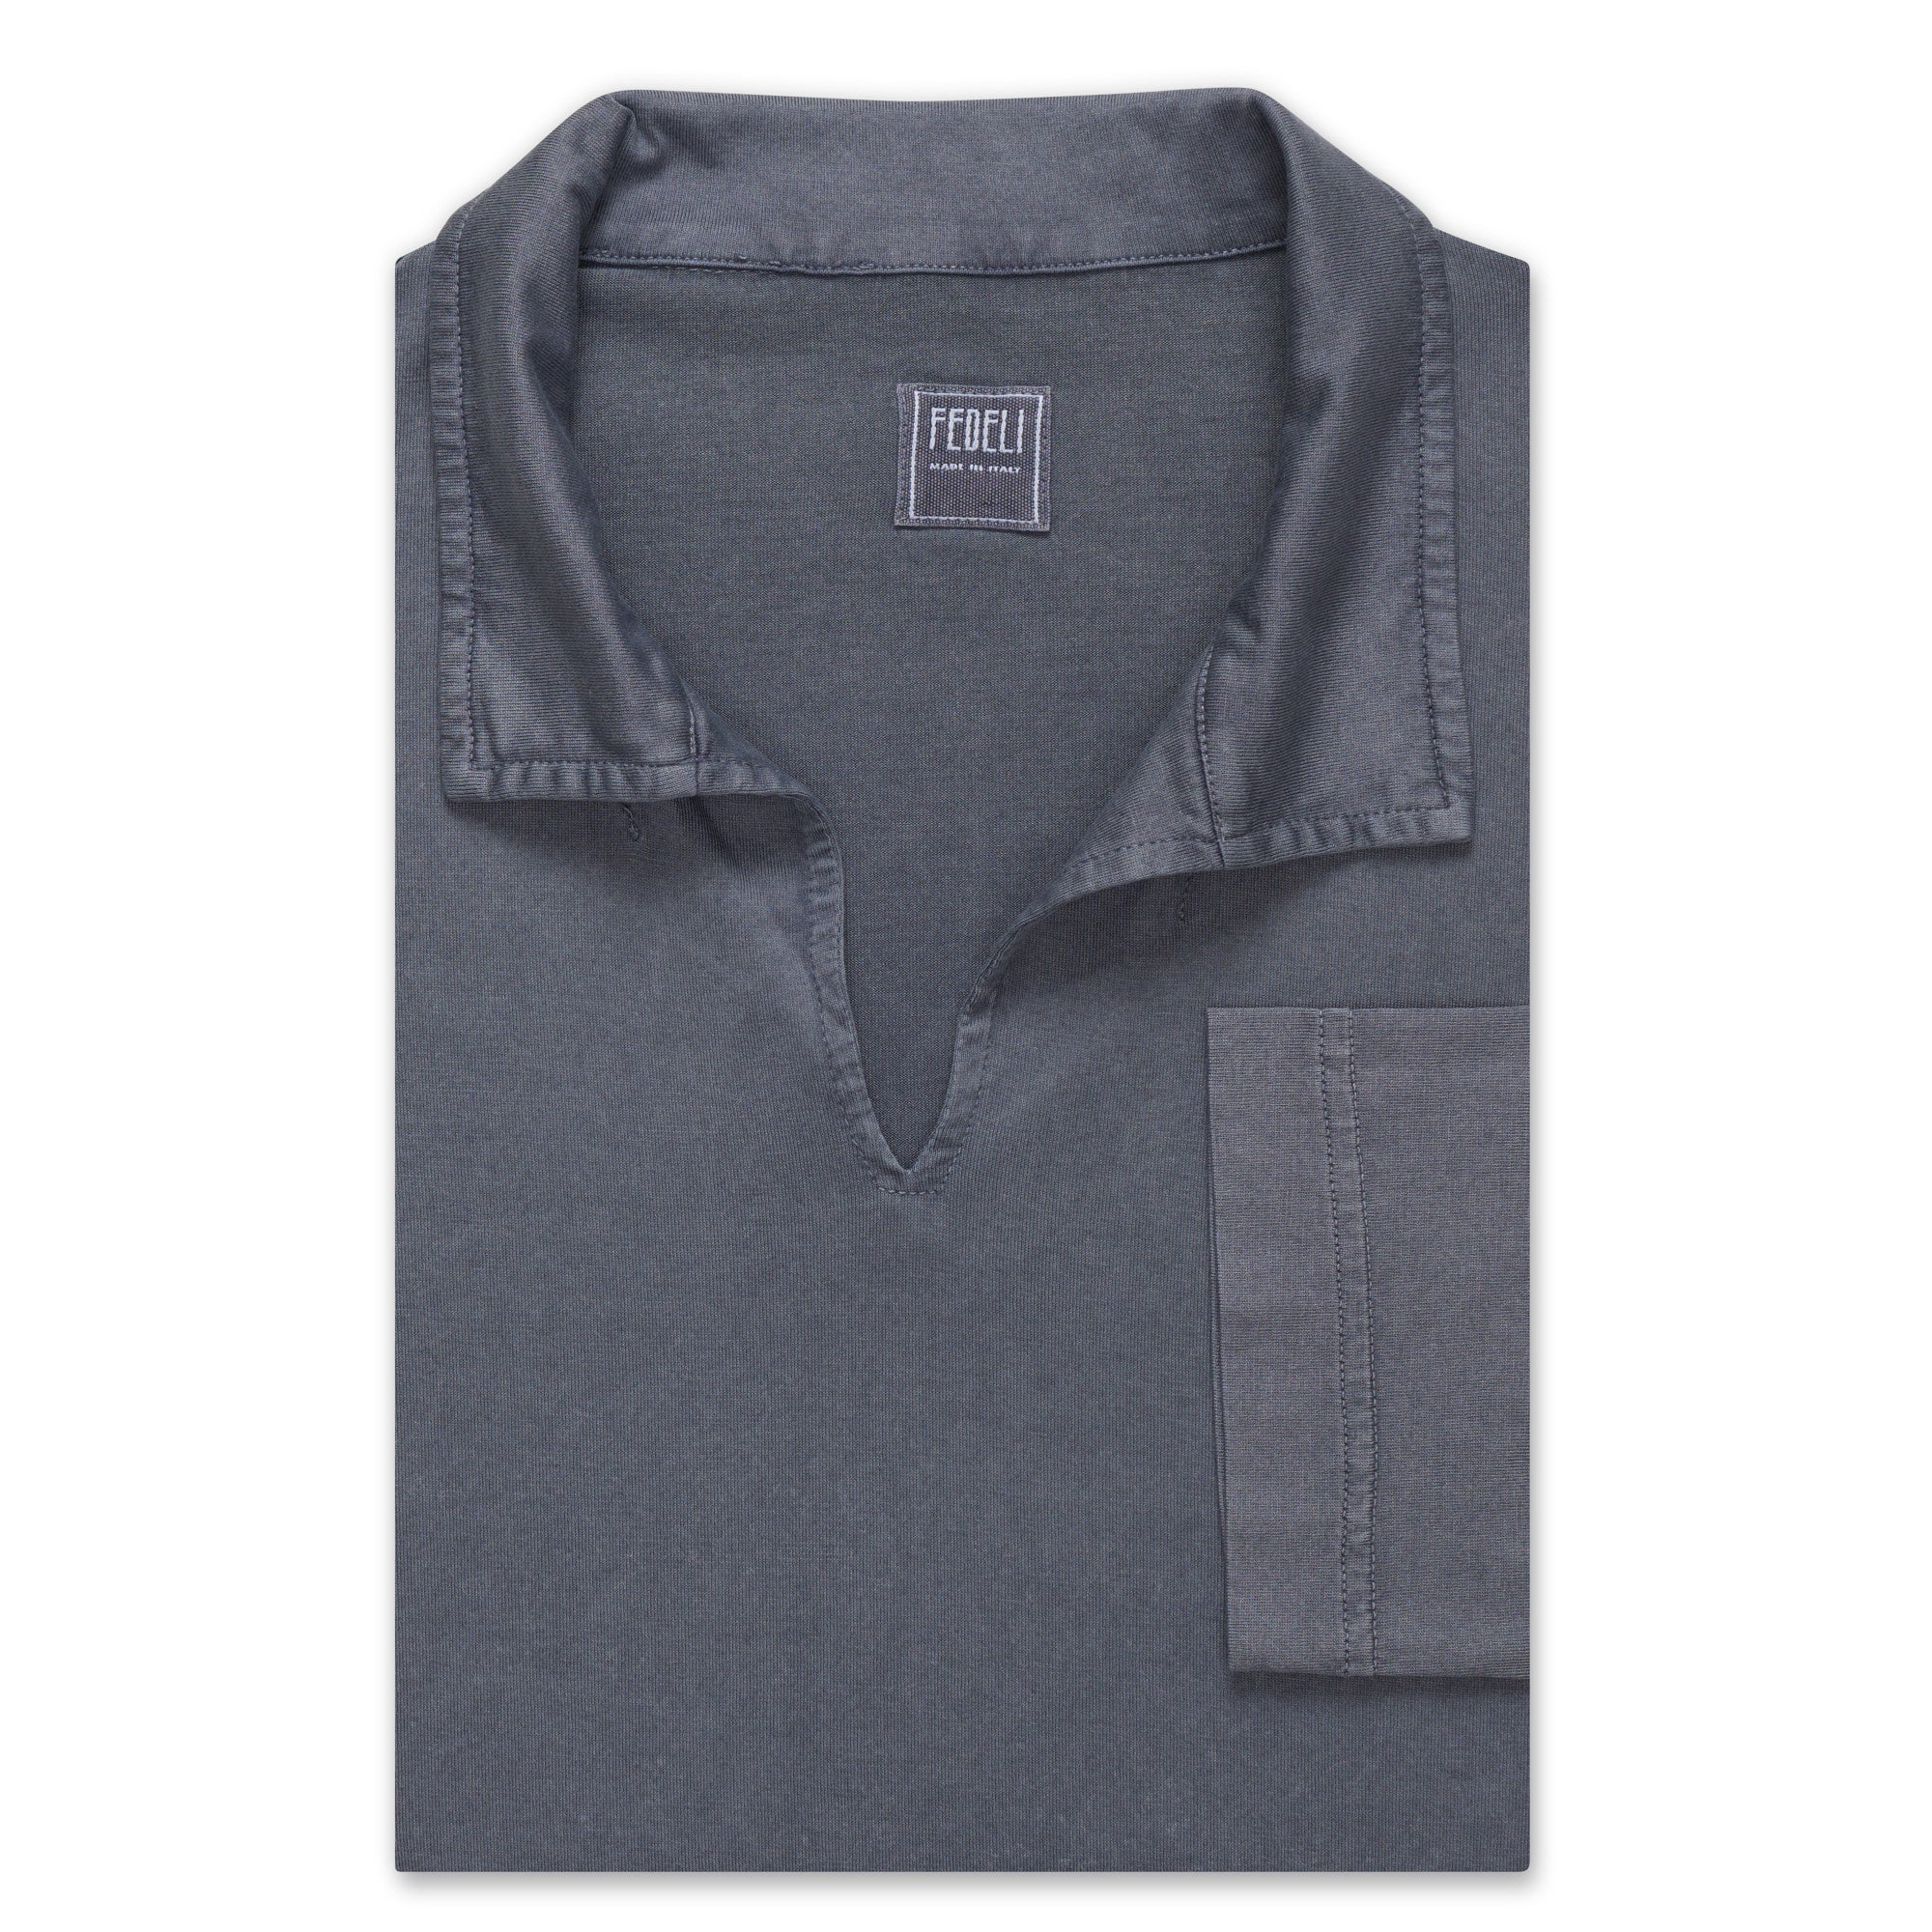 FEDELI "Peter" Gray Cotton Light Jersey Long Sleeve Polo Shirt 56 NEW US 2XL FEDELI